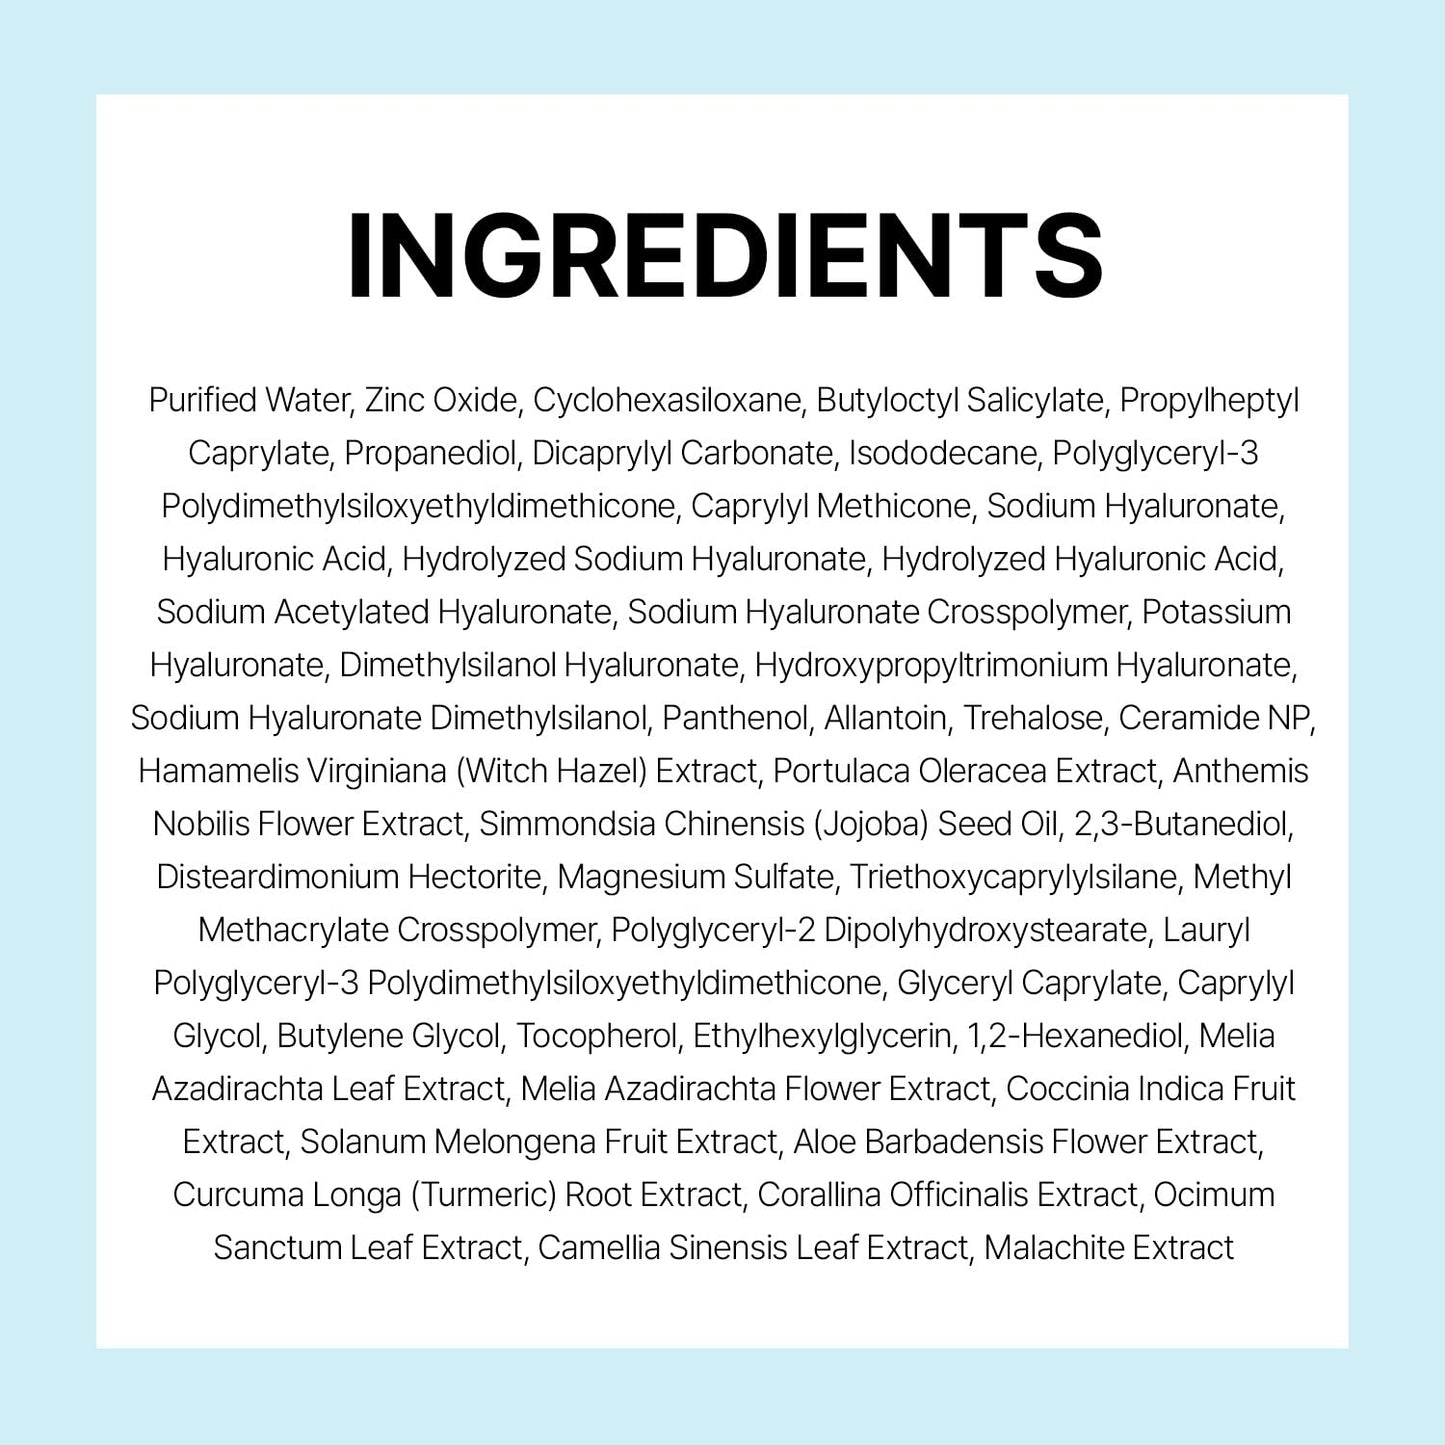 TORRIDEN DIVE-IN Mild Sunscreen, Vegan, Broad Spectrum SPF 50+ PA++++, Non-Nano, Reef-Safe Mineral Sunscreen for All Skin Types